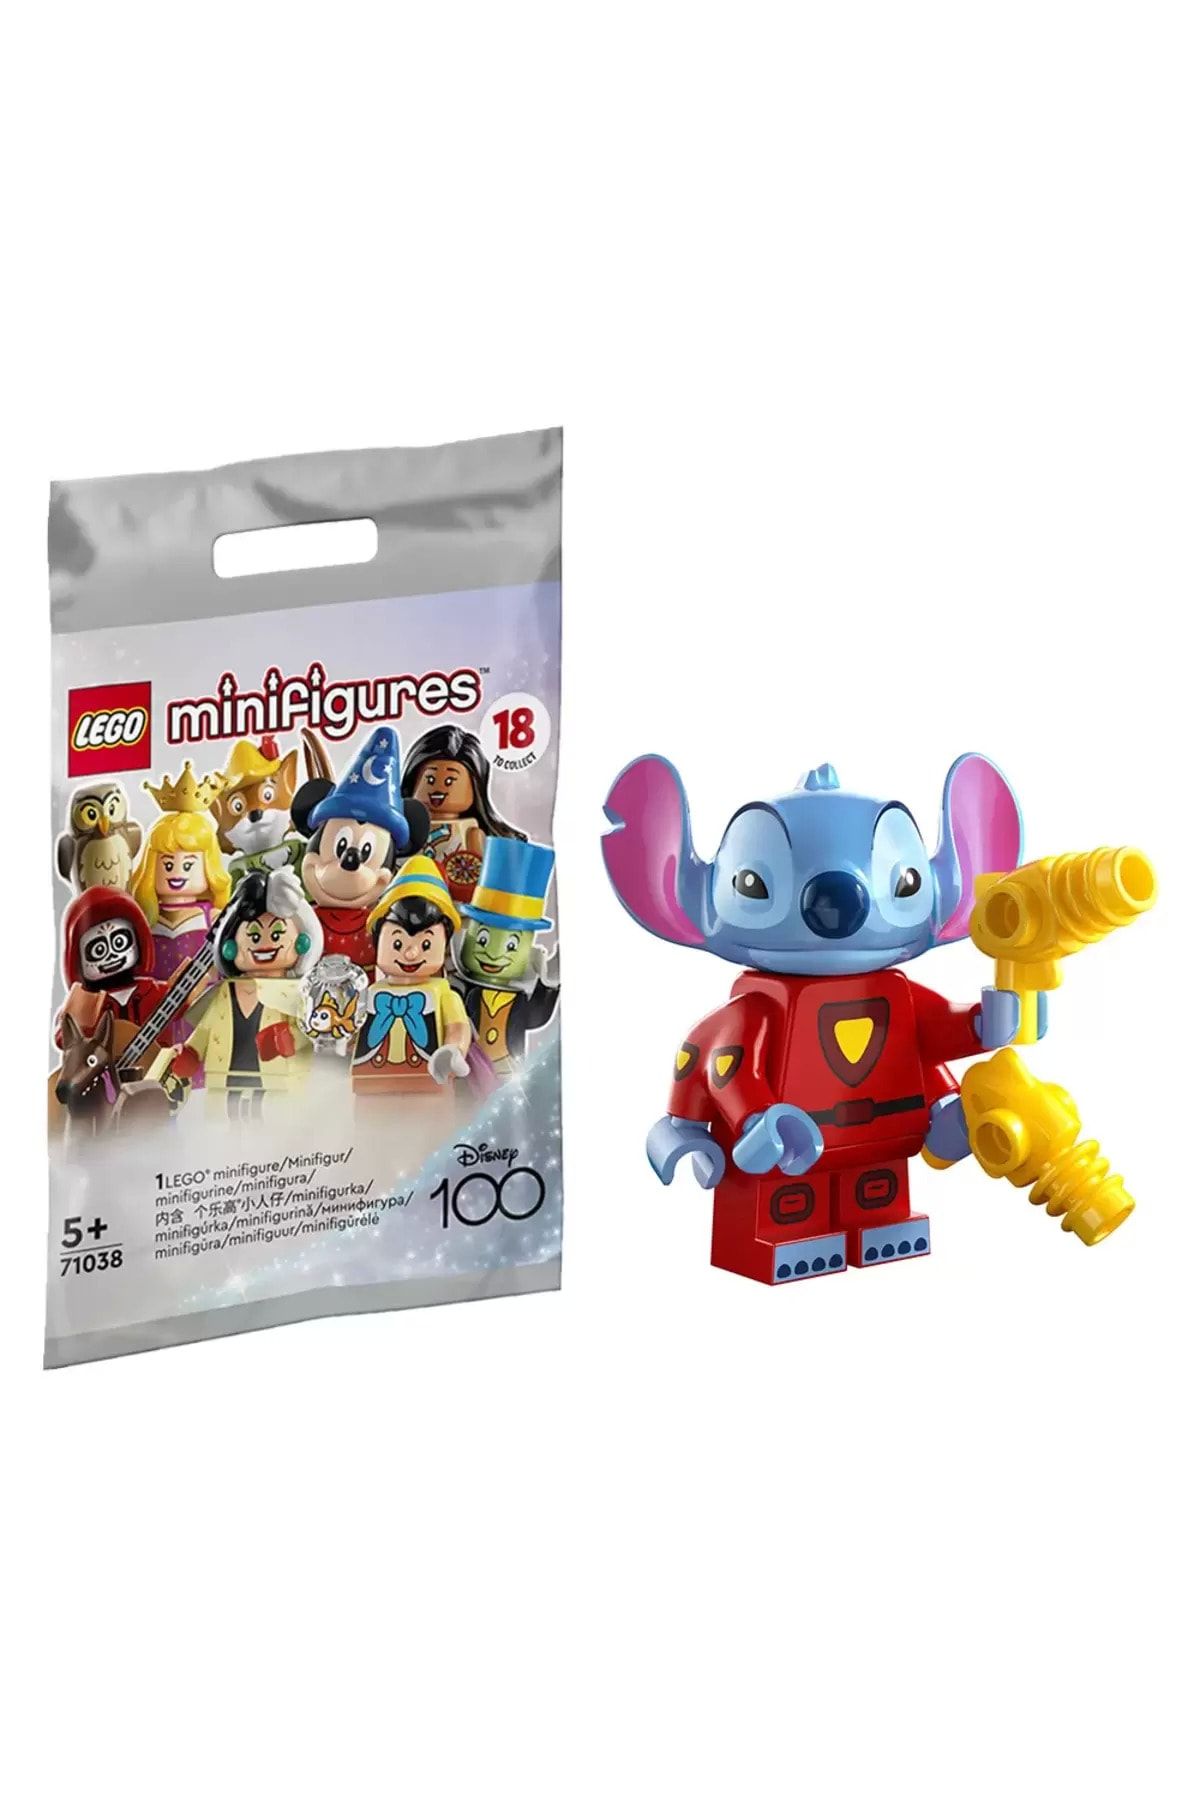 LEGO Disney Series 16 Collectible Minifigure - Stitch (71012